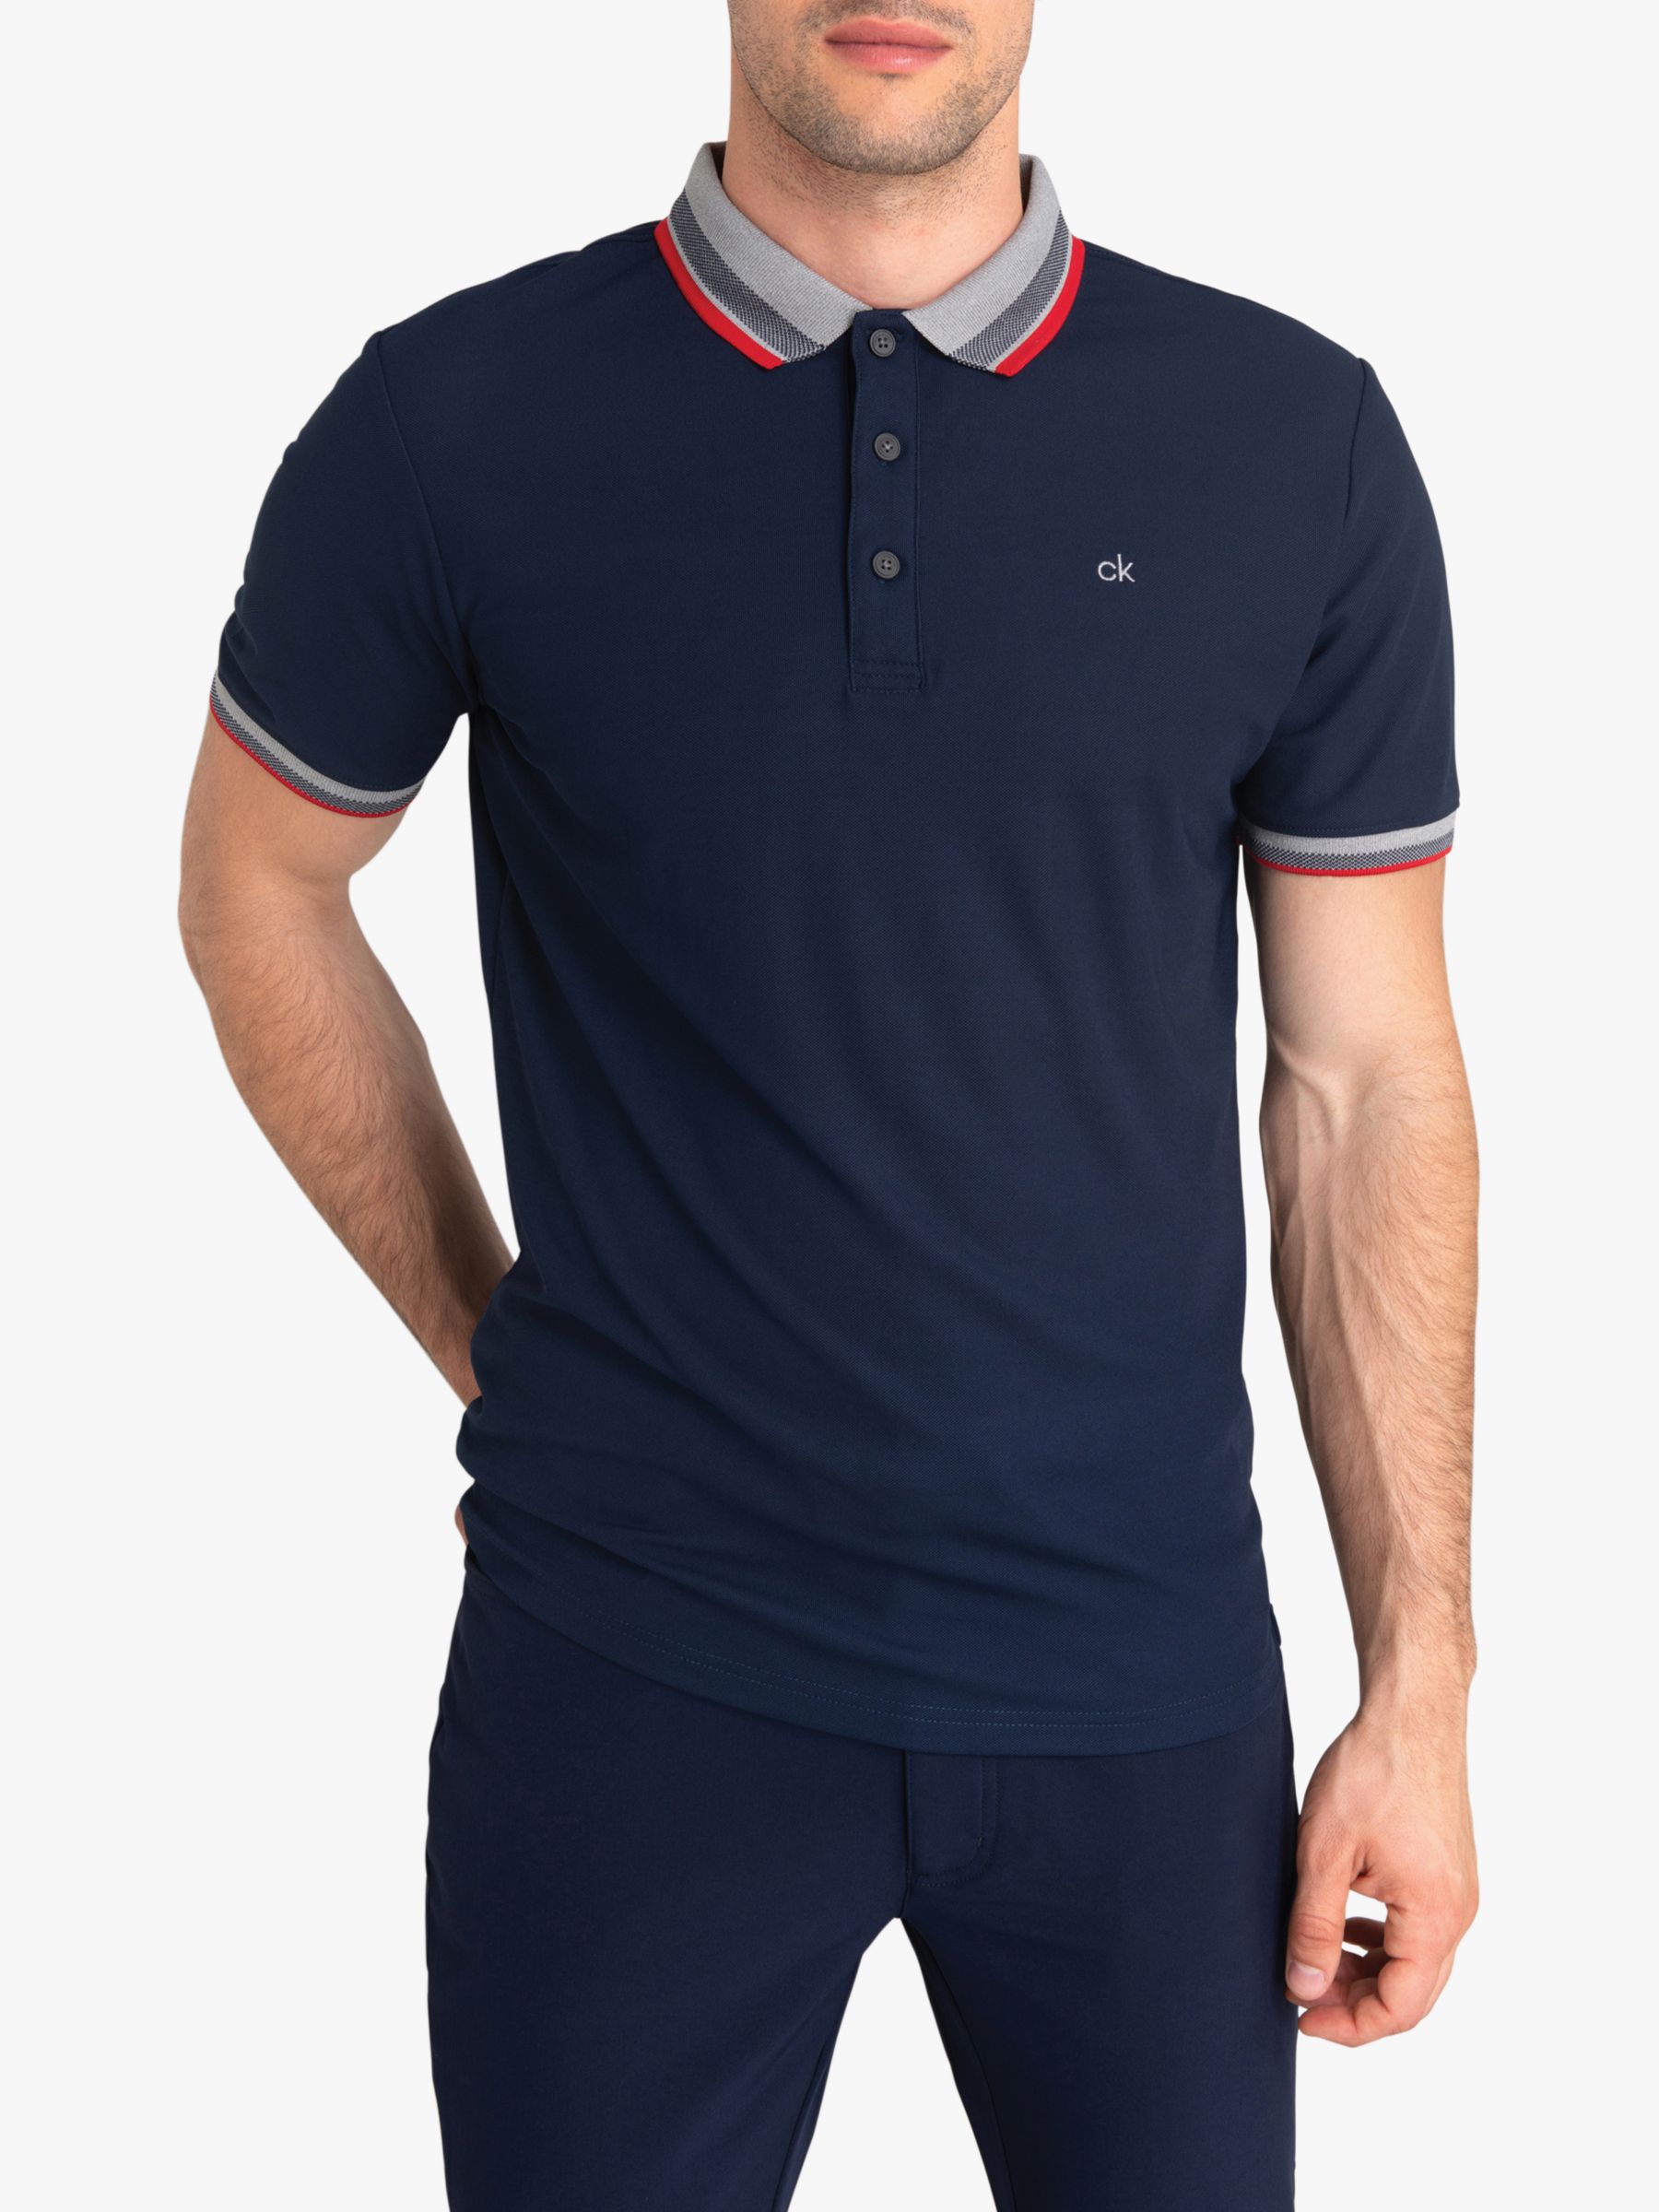 Calvin Klein Golf Spark Polo Shirt, Navy/White/Red at John Lewis & Partners